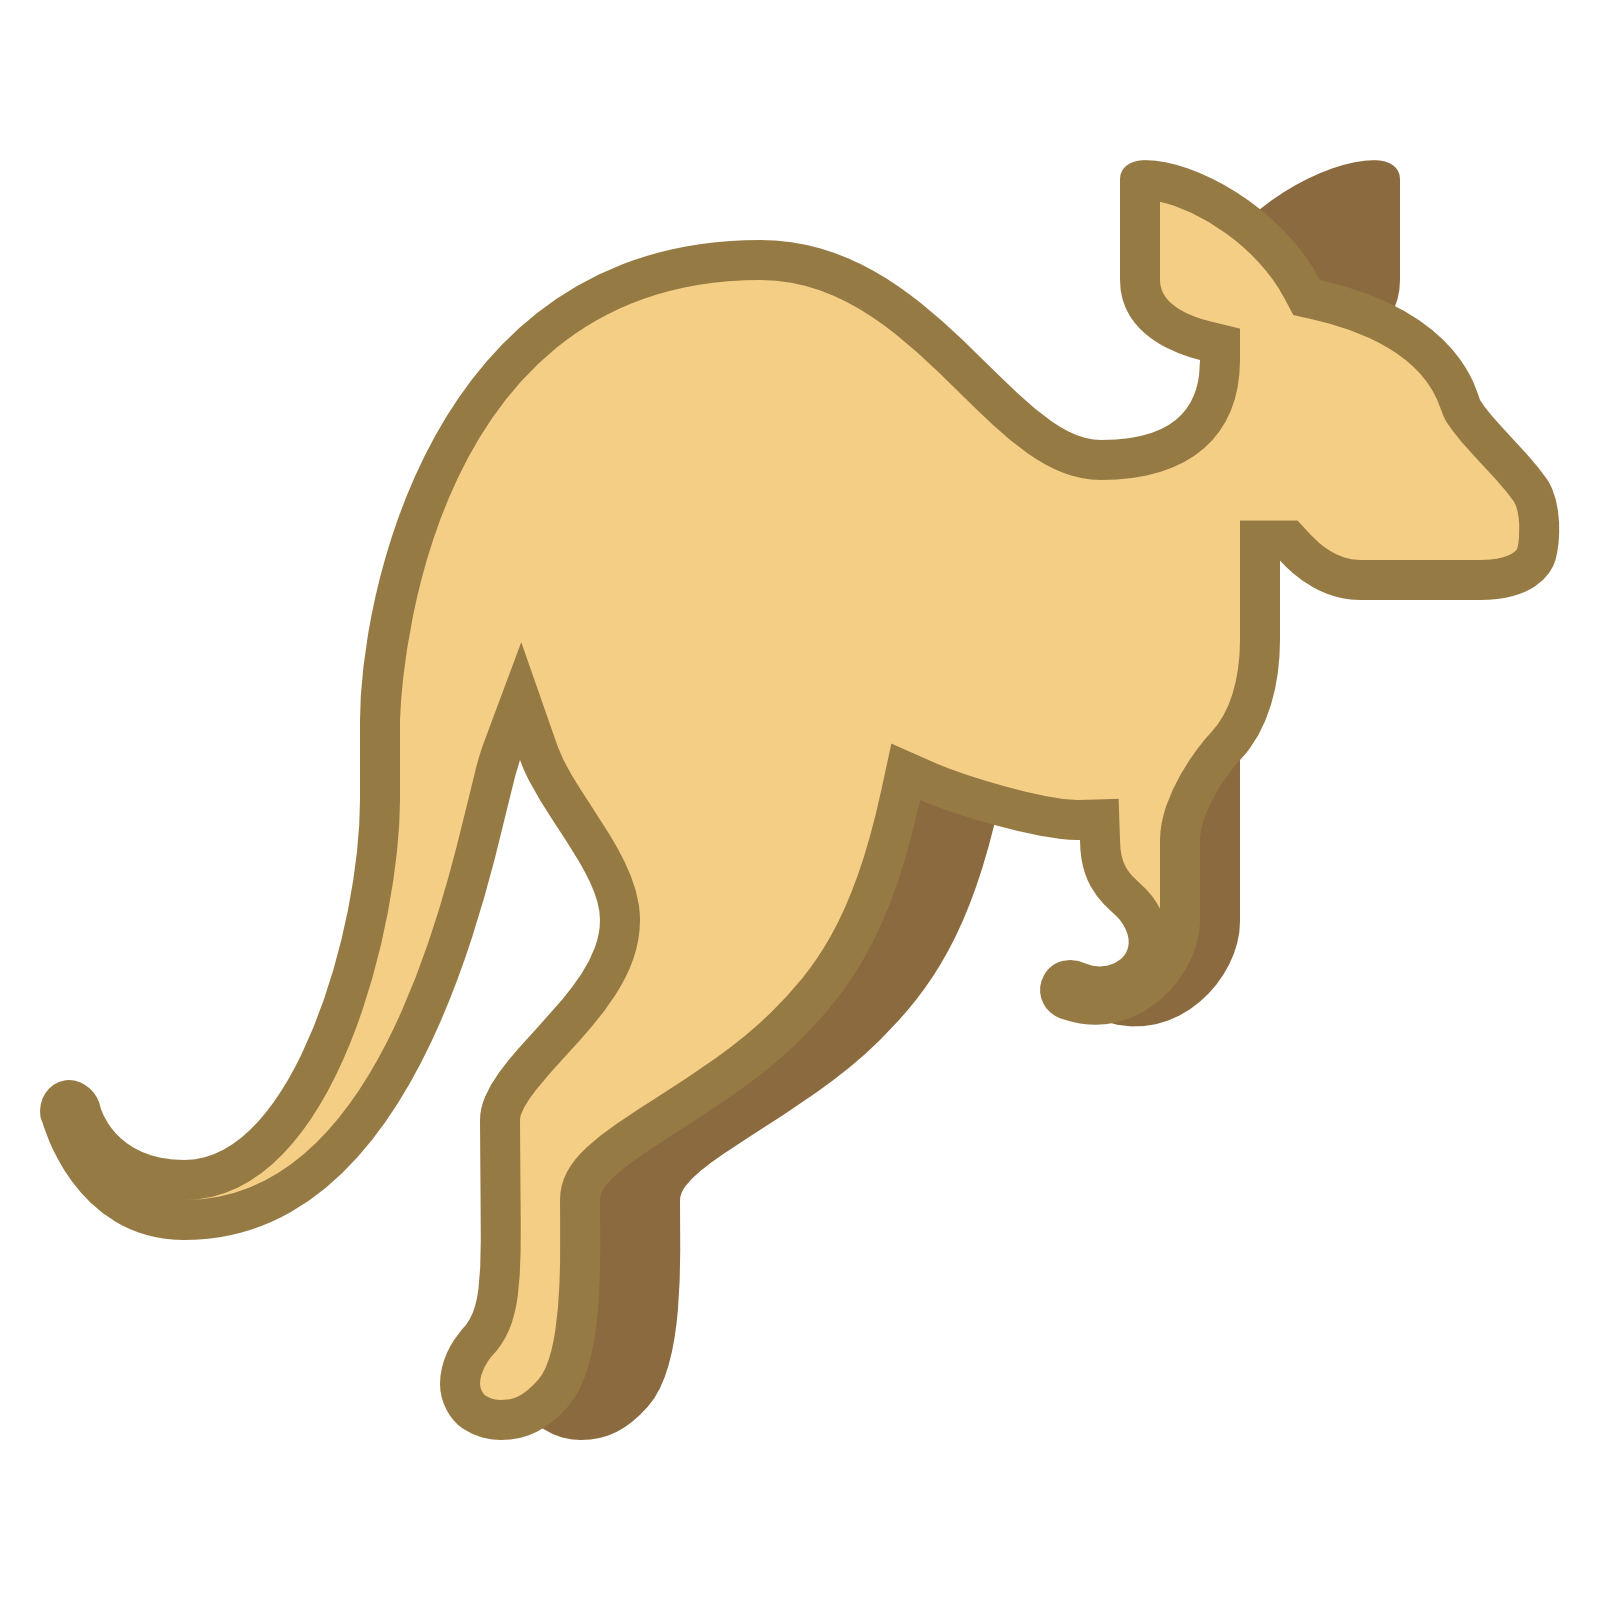 kangaroo 4